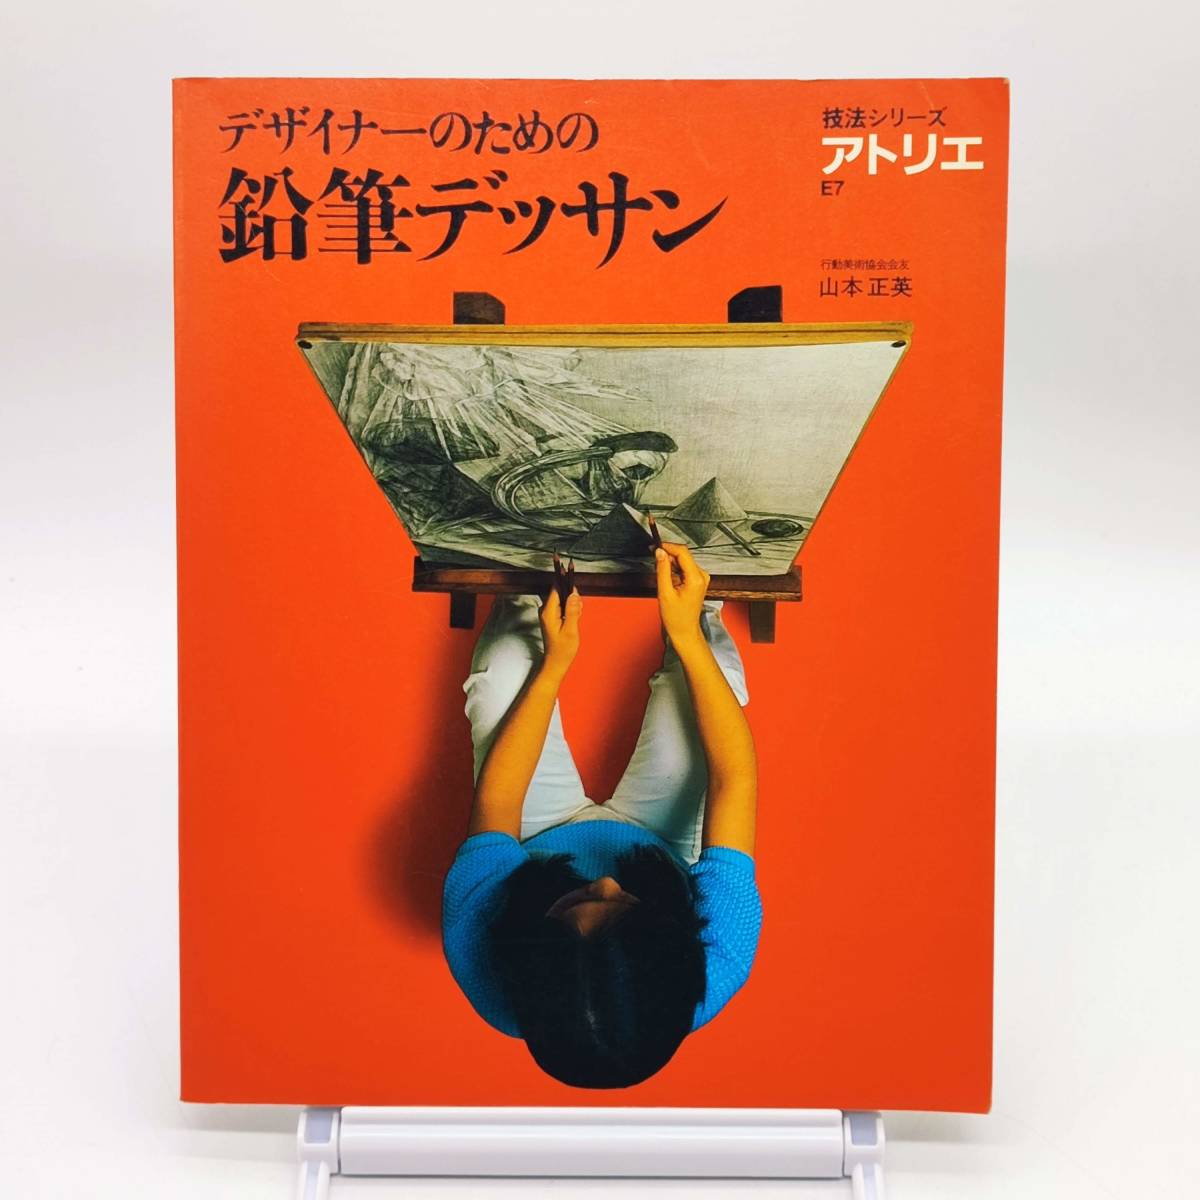 设计师铅笔画 技术系列 Atelier E7 Masahide Yamamoto 1985 Atelier Publishing A240122, 艺术, 娱乐, 绘画, 技术书